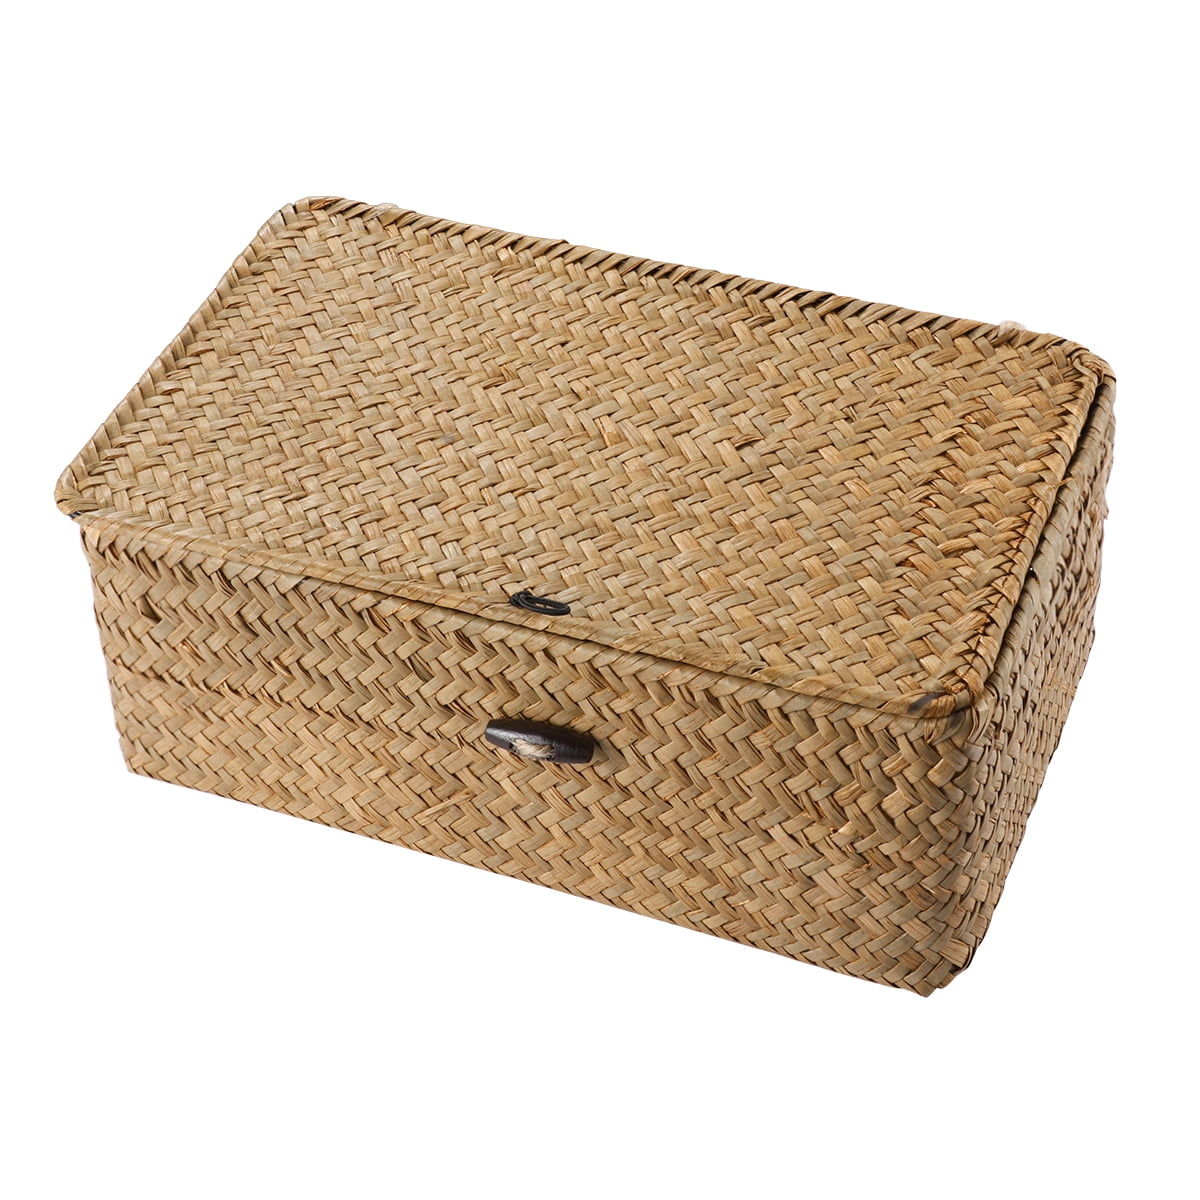 LIOOBO Straw Woven Debris Desktop Storage Box Hand-woven Basket Organizer Container with Lid Size S 